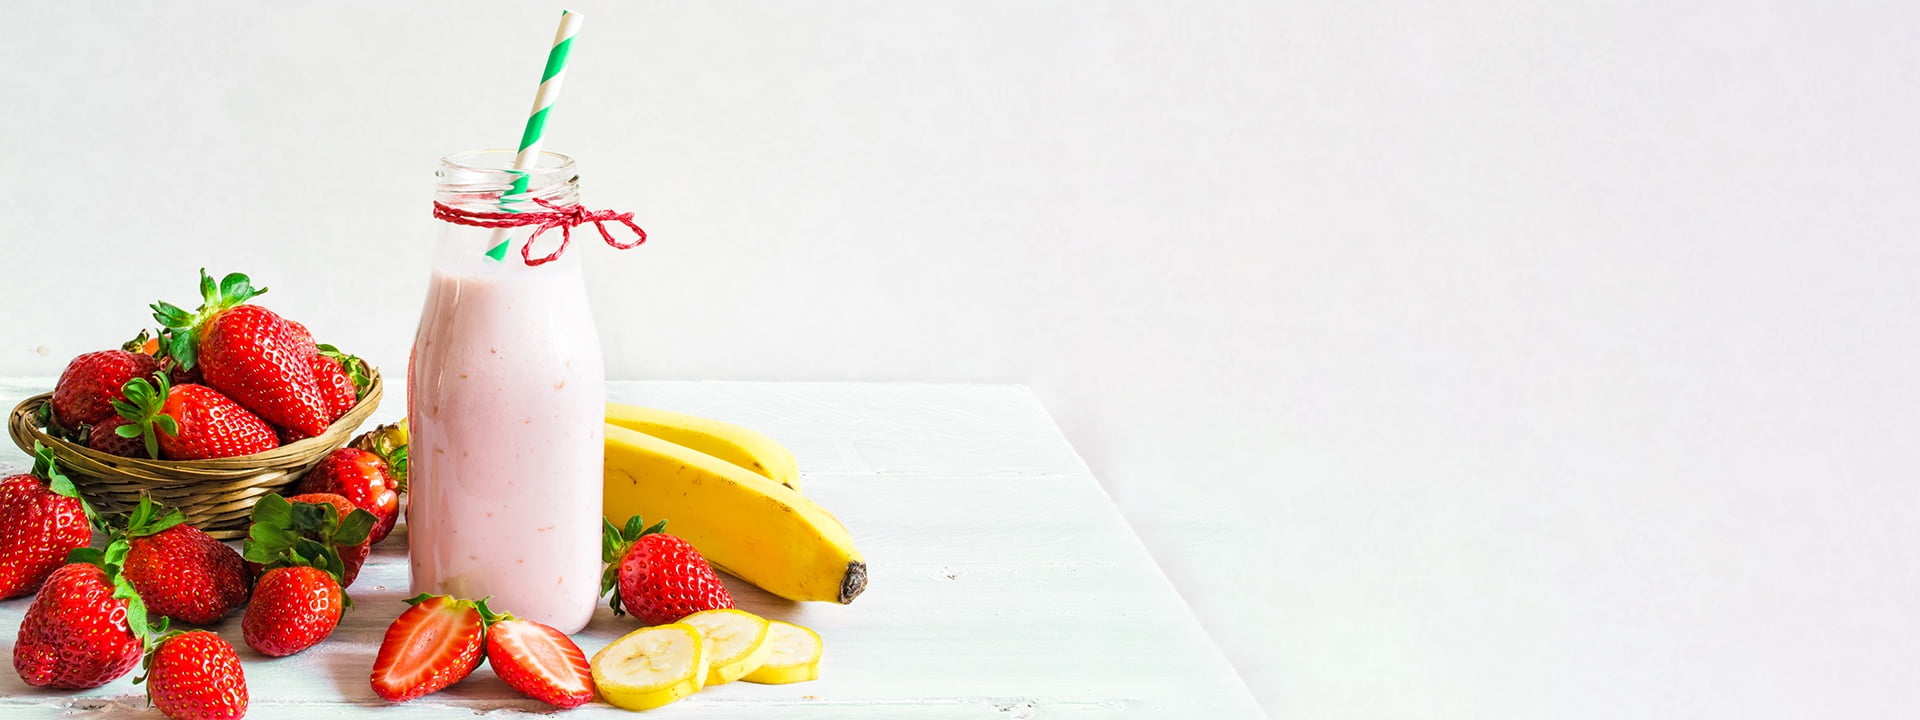 Strawberry Banana Protein Powder Milkshake Recipe